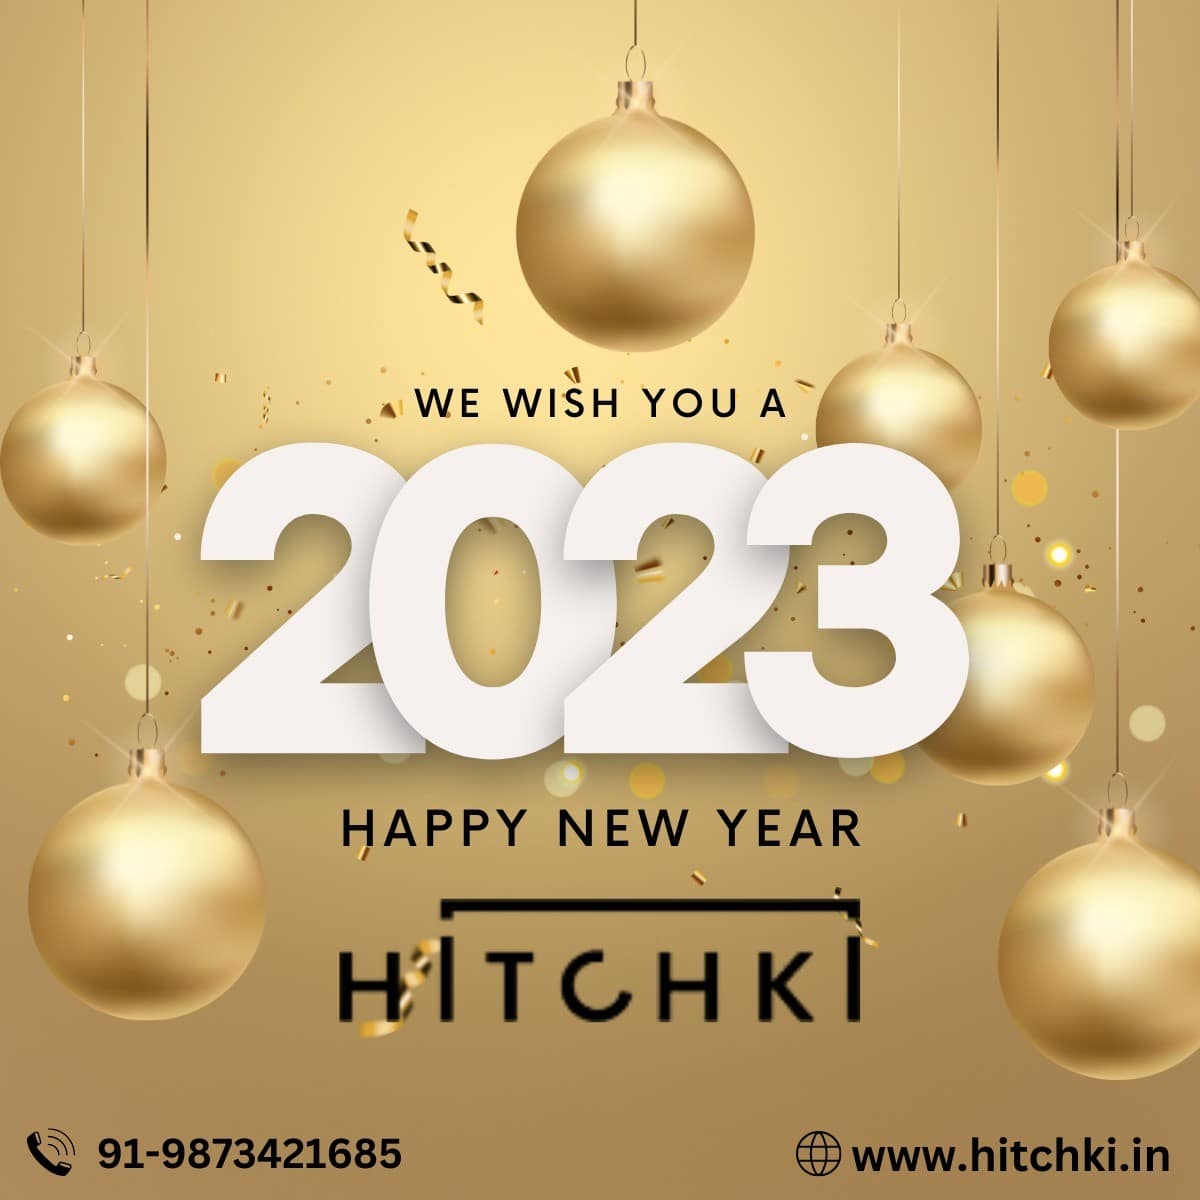 Wish You A Very Happy New Year From Hitchki | HITCHKI